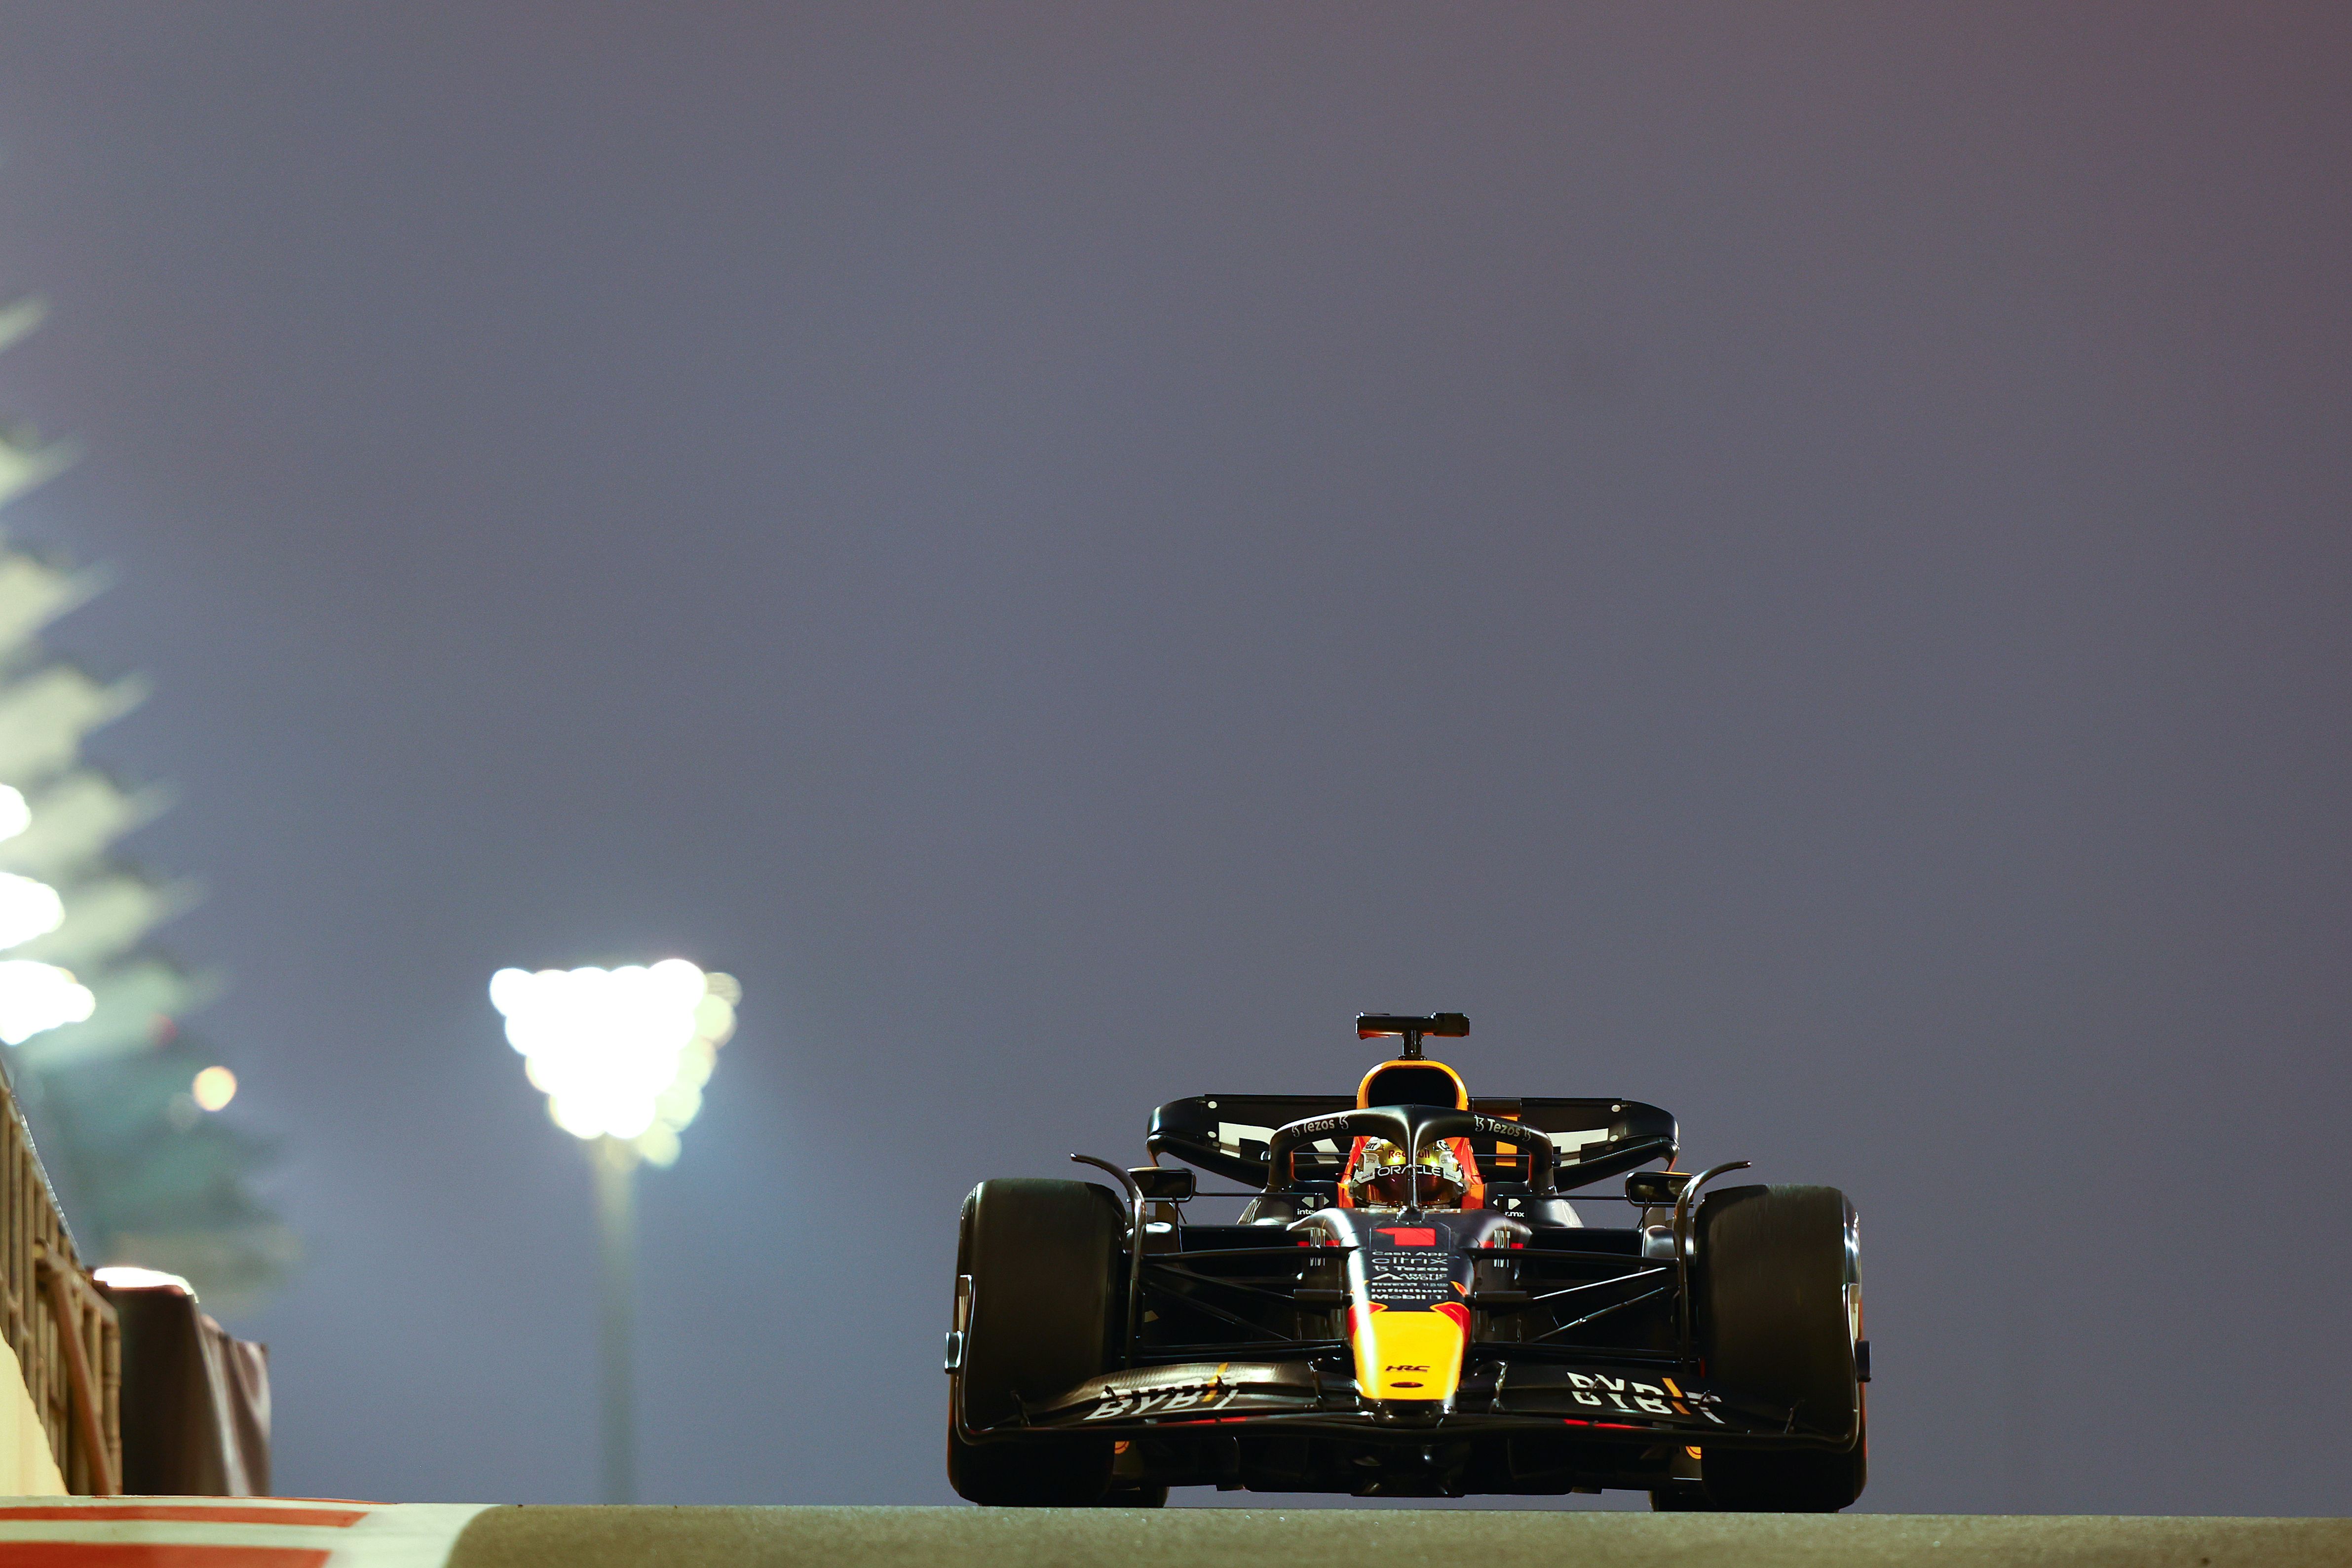 Max Verstappen driving in Abu Dhabi